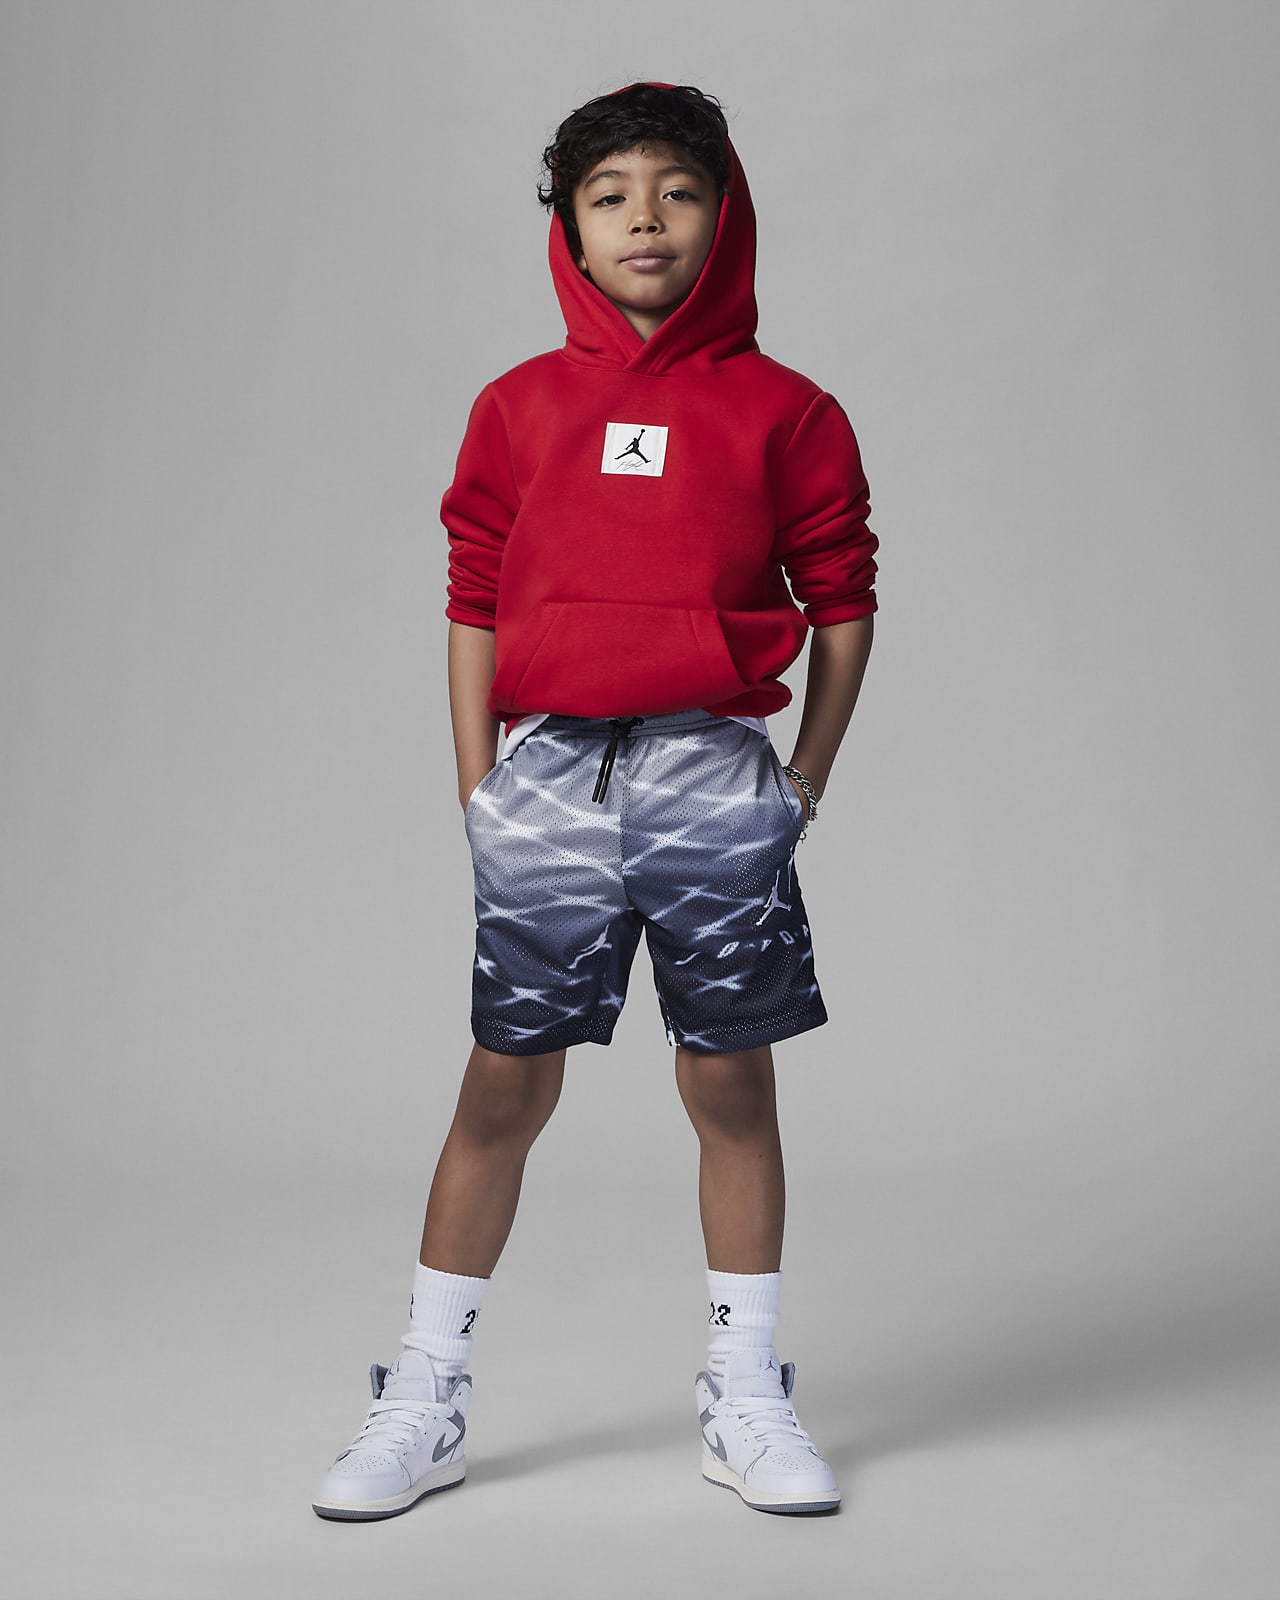 Kids\' Jordan Essentials Nike Shorts. Shorts MJ Dri-FIT Printed Mesh Little